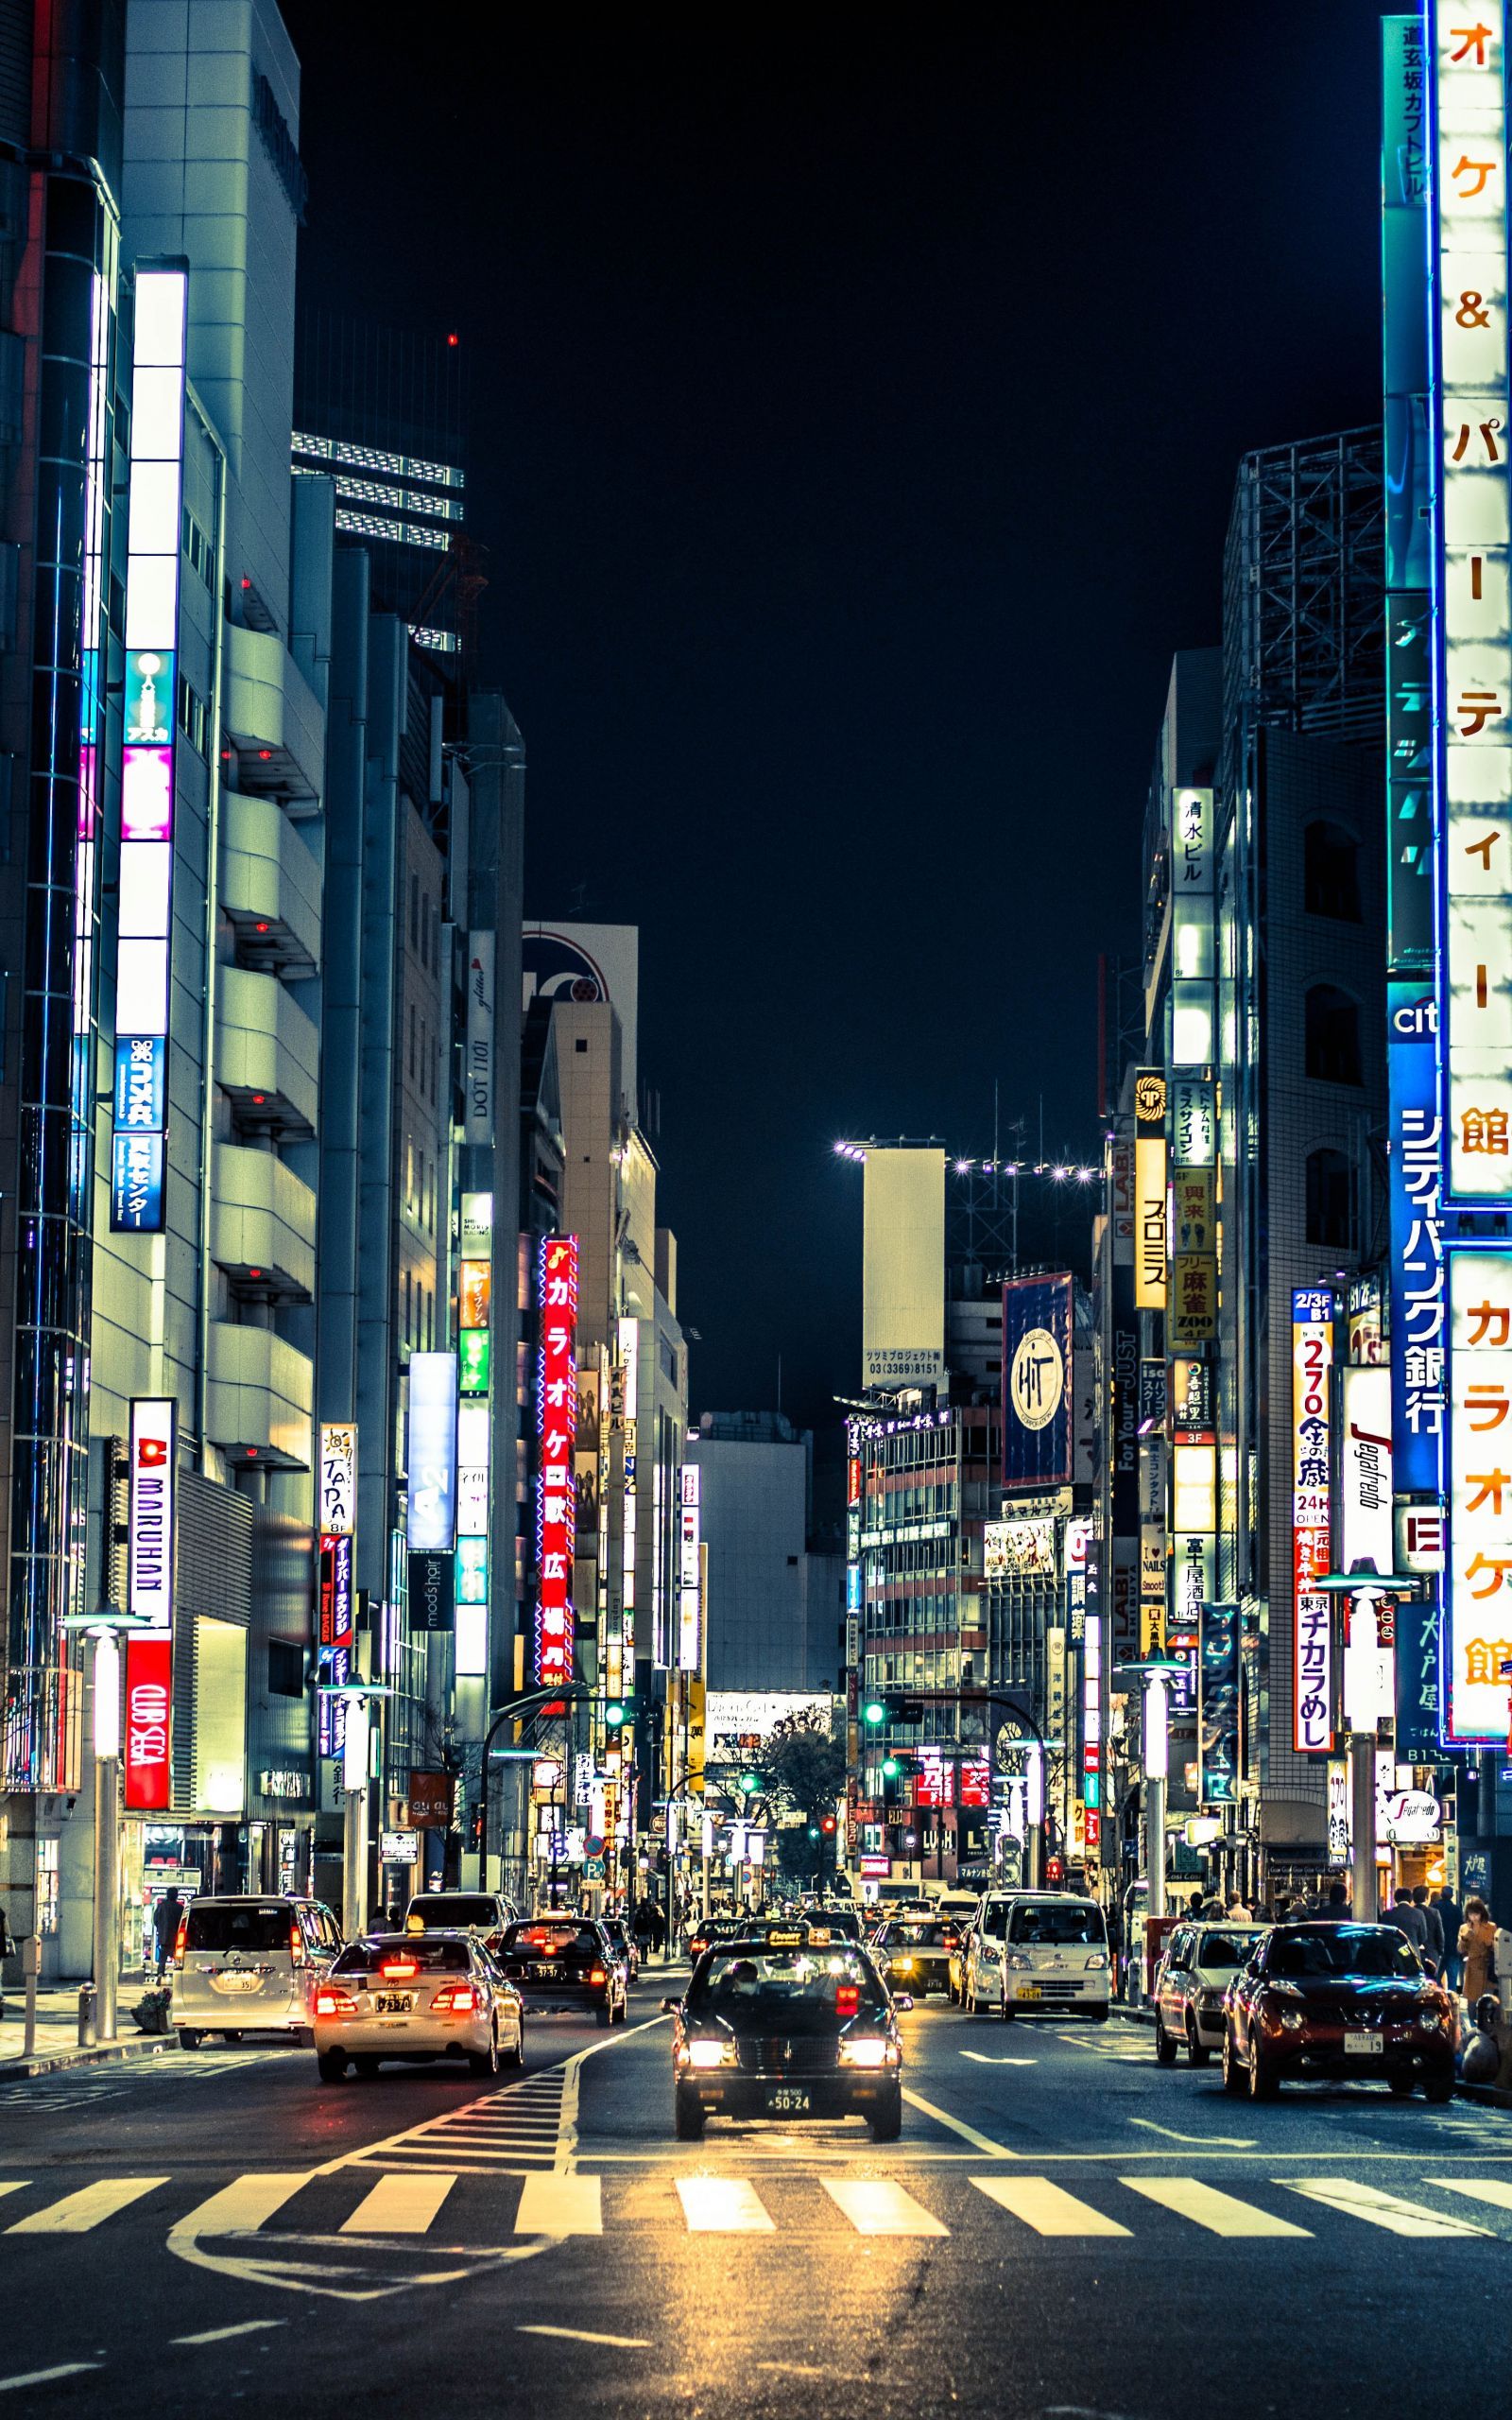 Shibuya Japan at Night wallpaper in 1600x2560 resolution